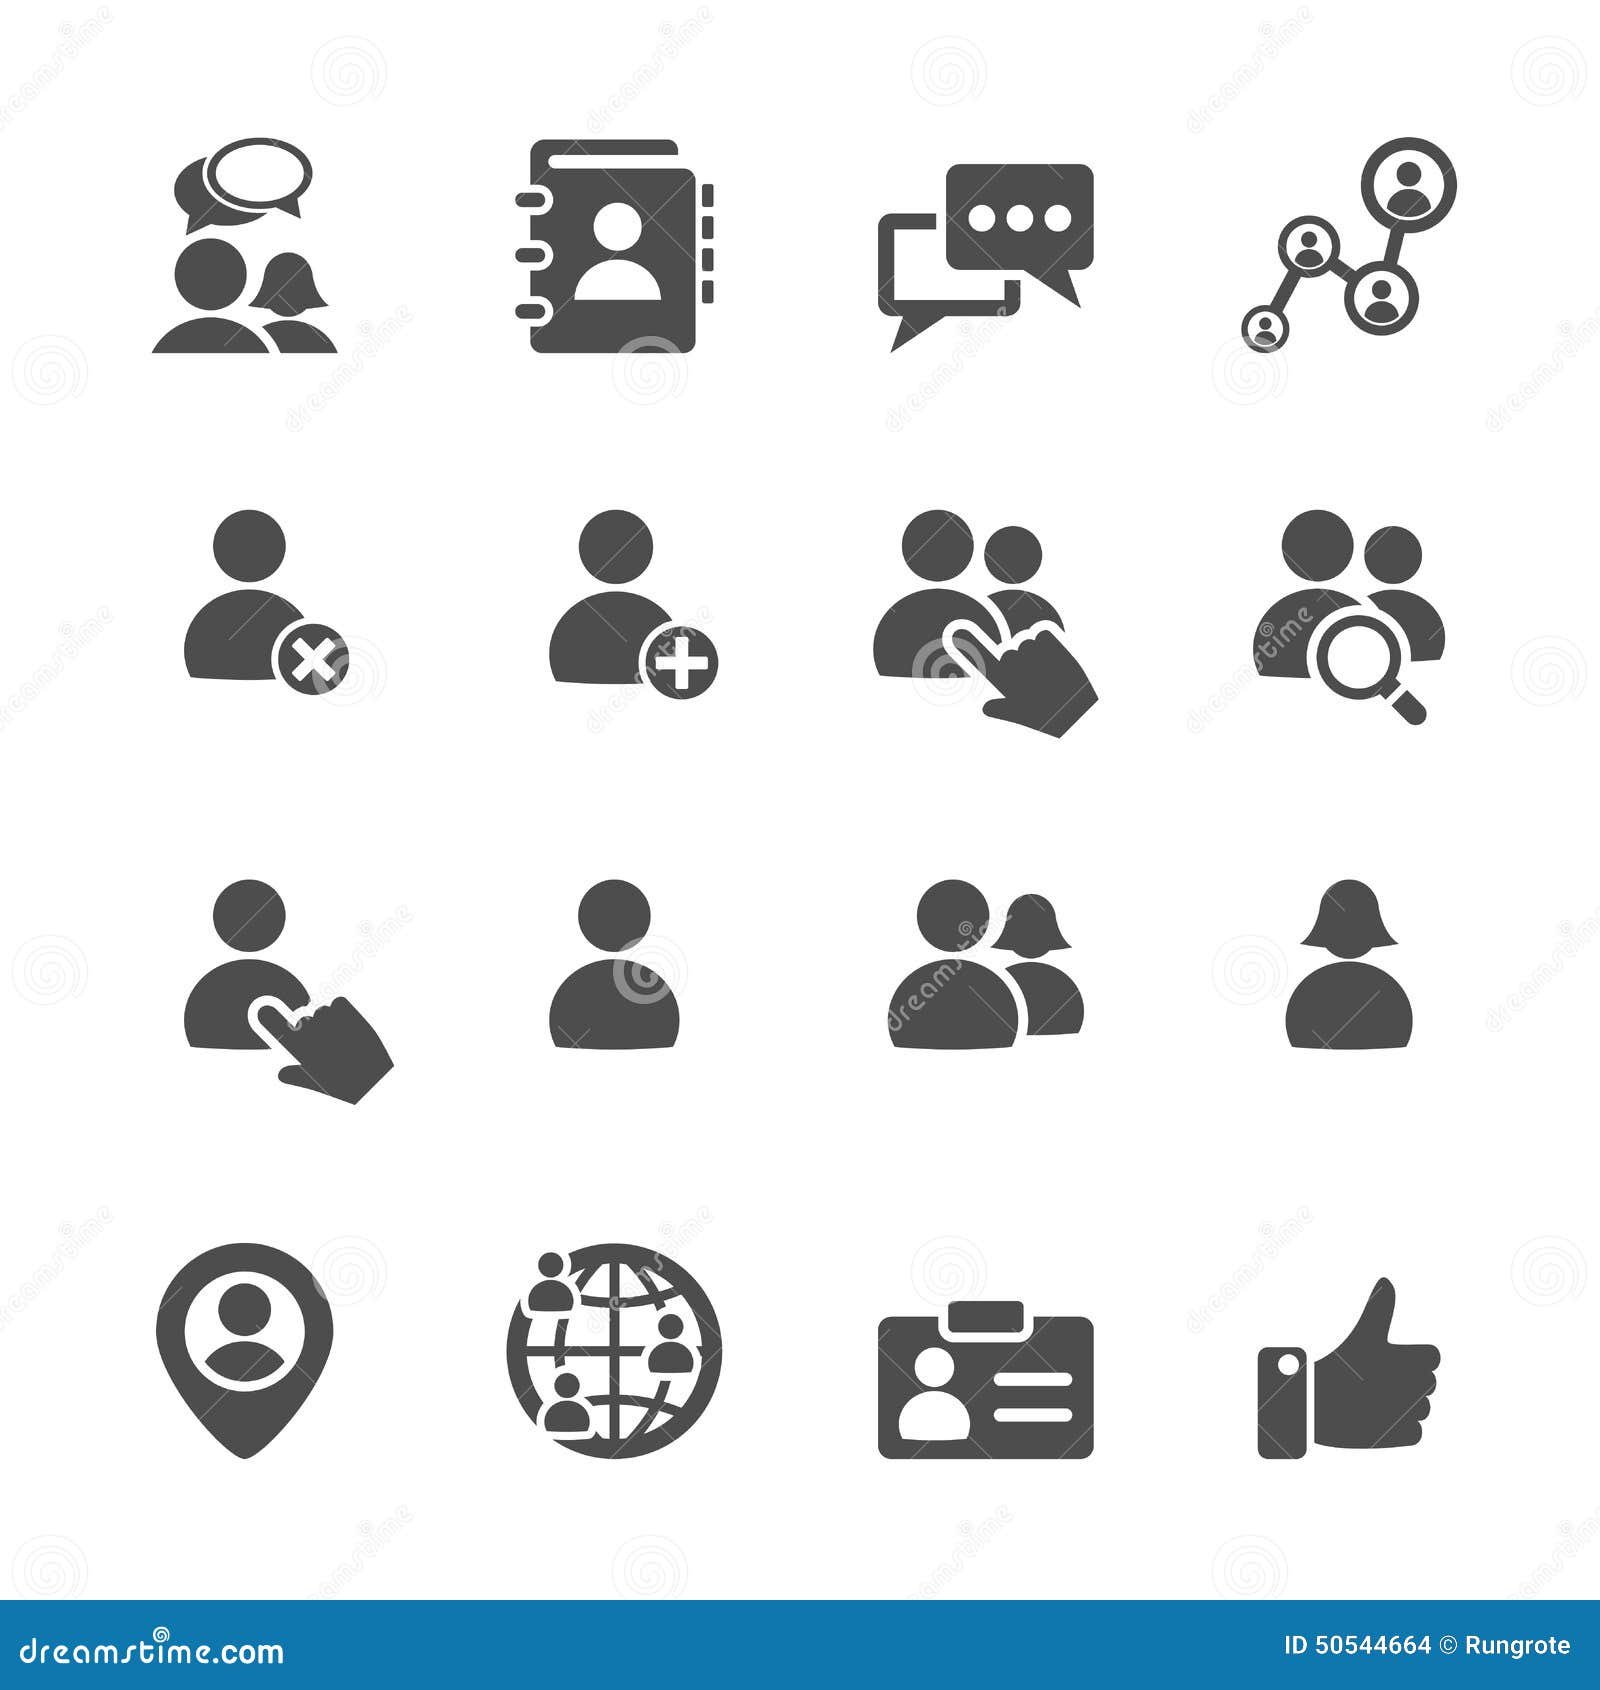 social network user icon set,  eps10